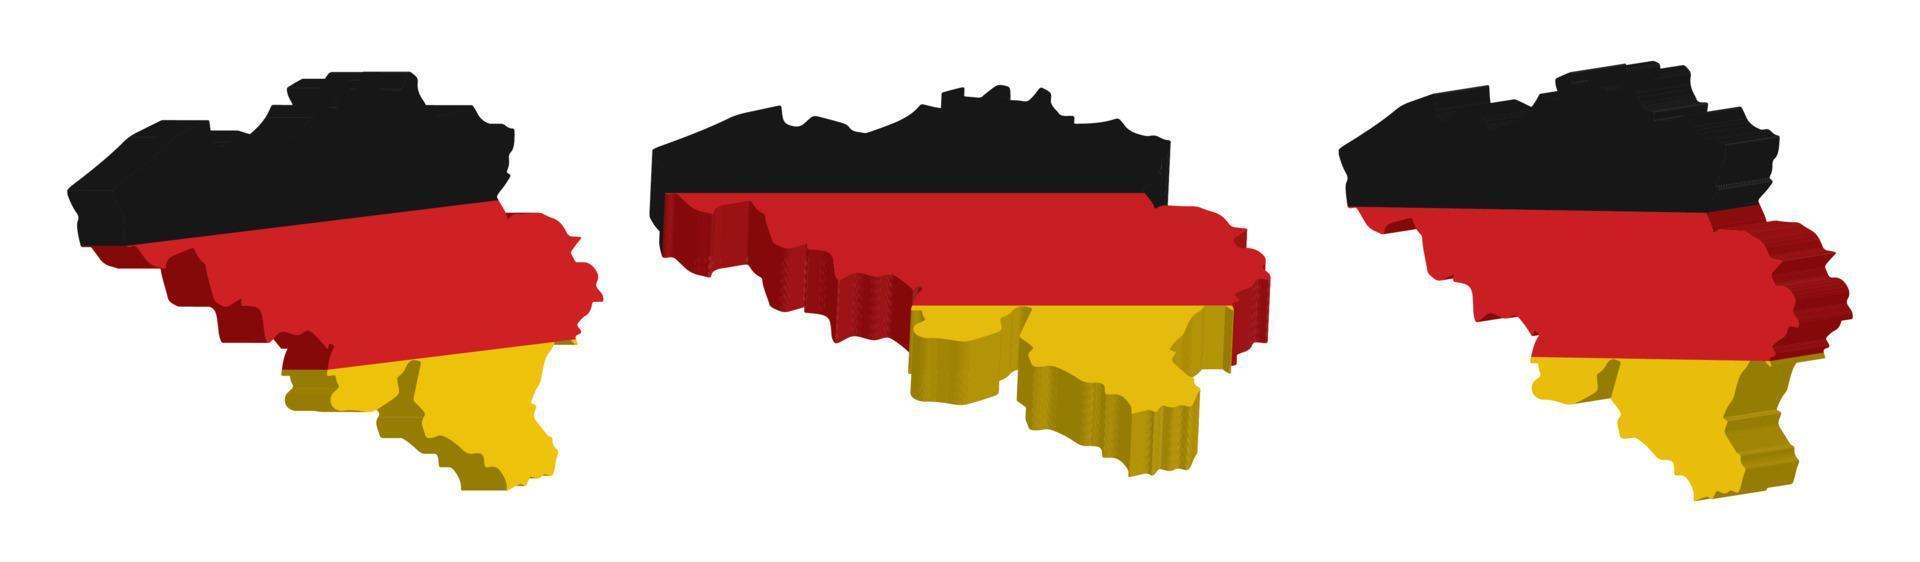 realista 3d mapa do Alemanha vetor Projeto modelo